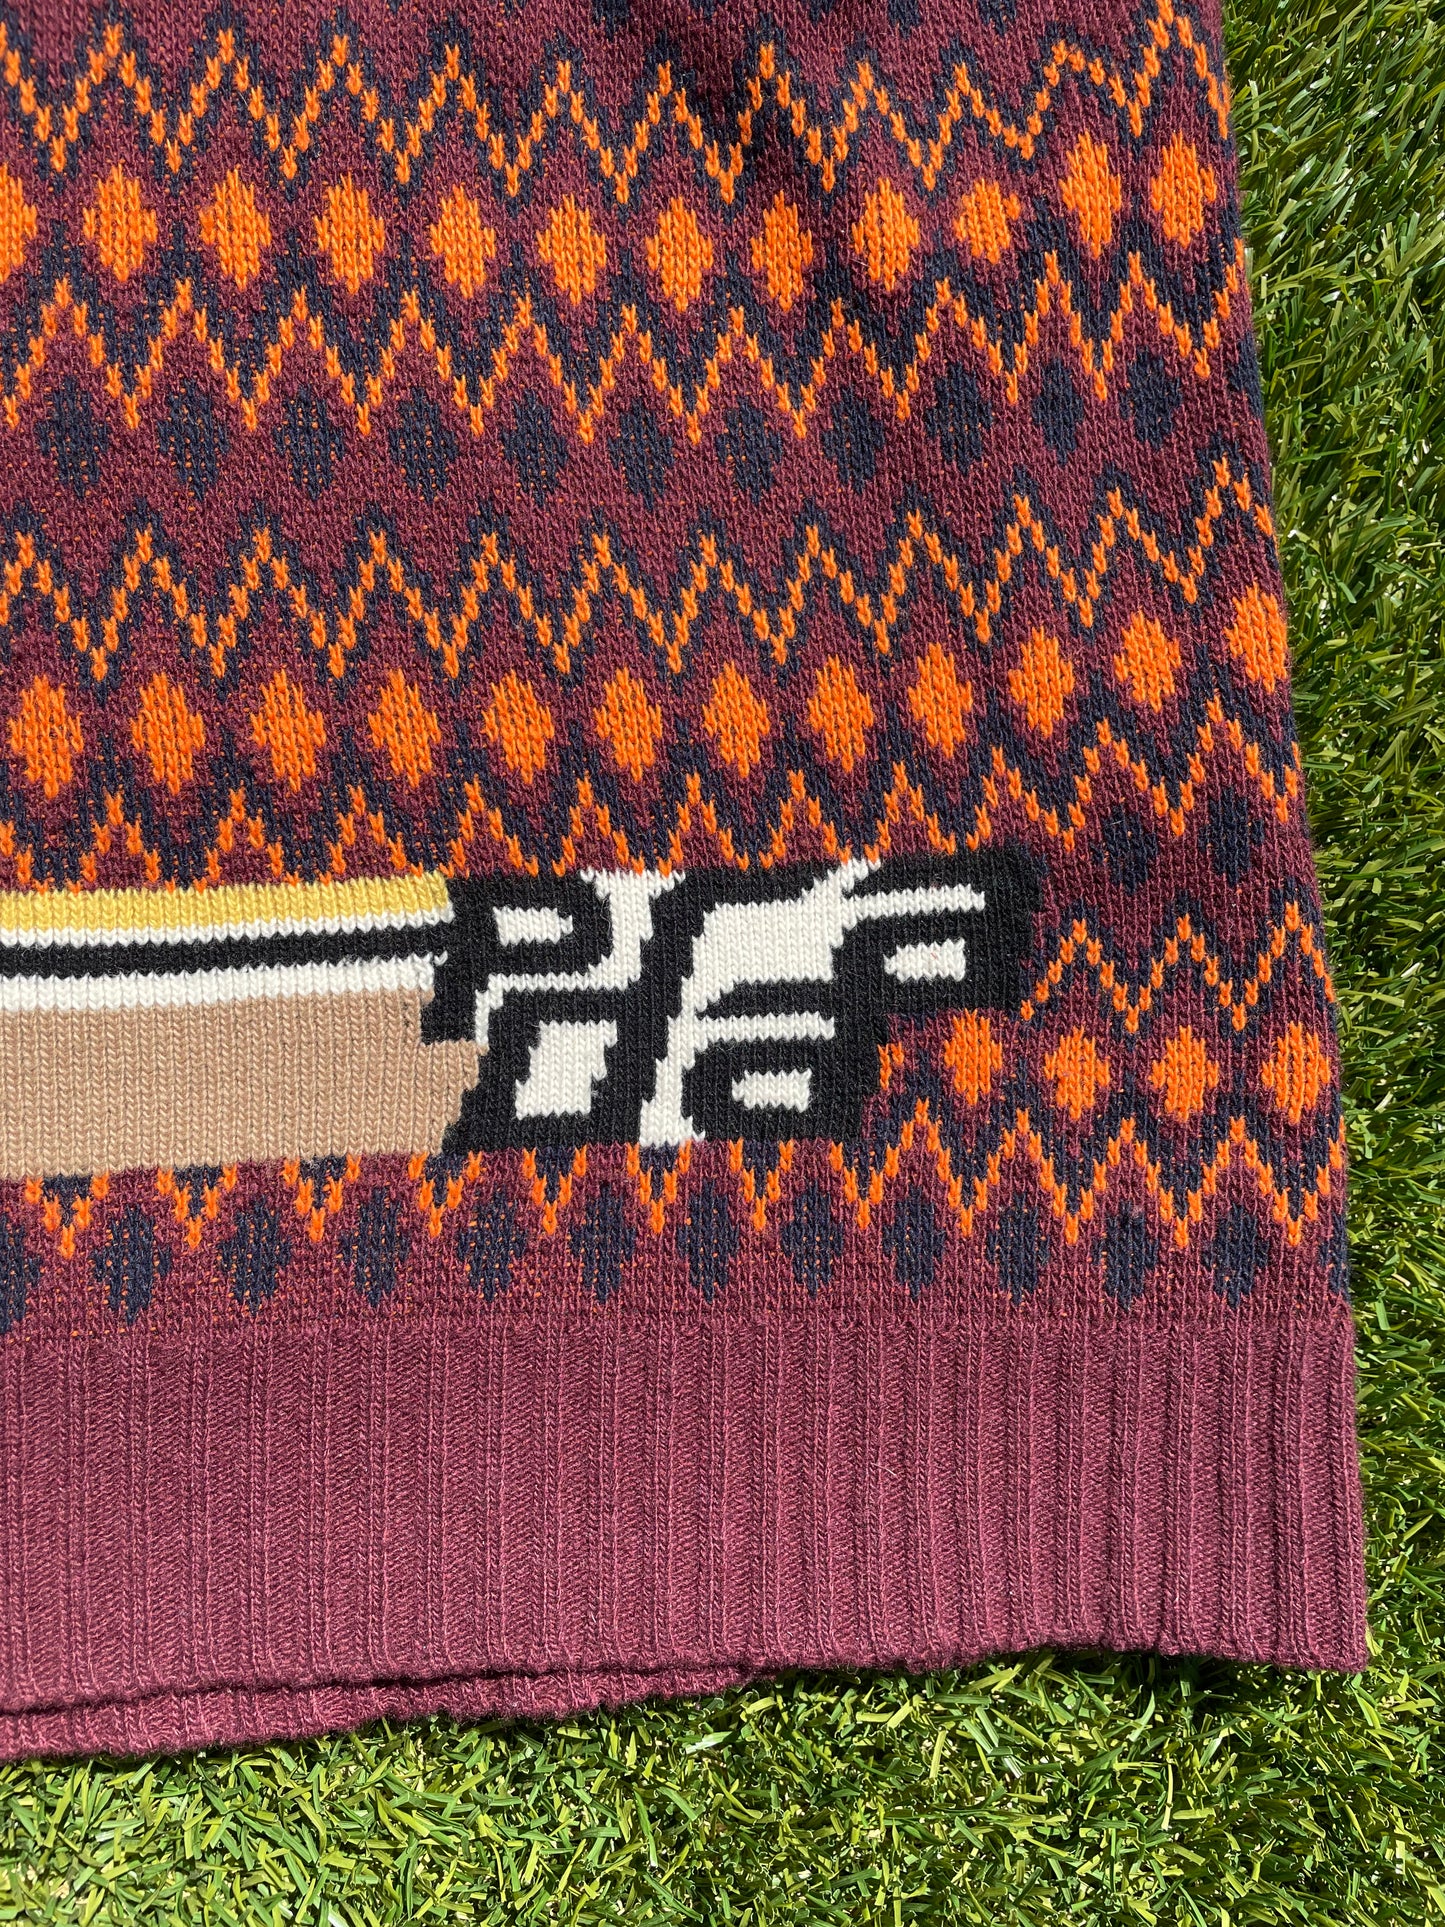 SS17’ Prada V-Neck Cashmere Runway Sweatshirt